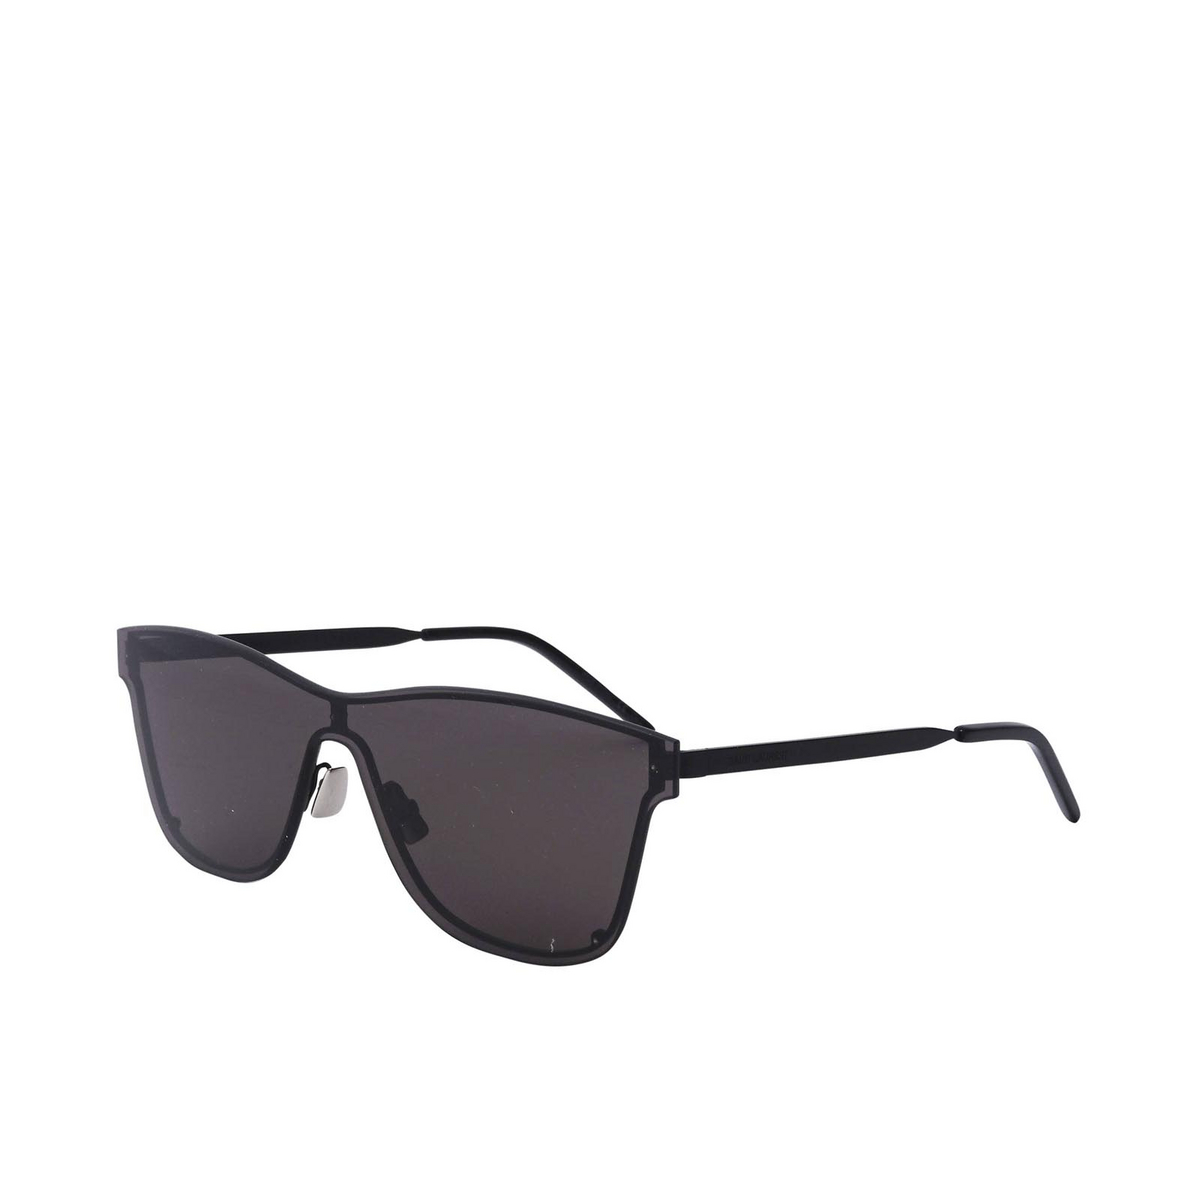 Saint Laurent® Mask Sunglasses: SL 51 MASK color Black 001 - three-quarters view.